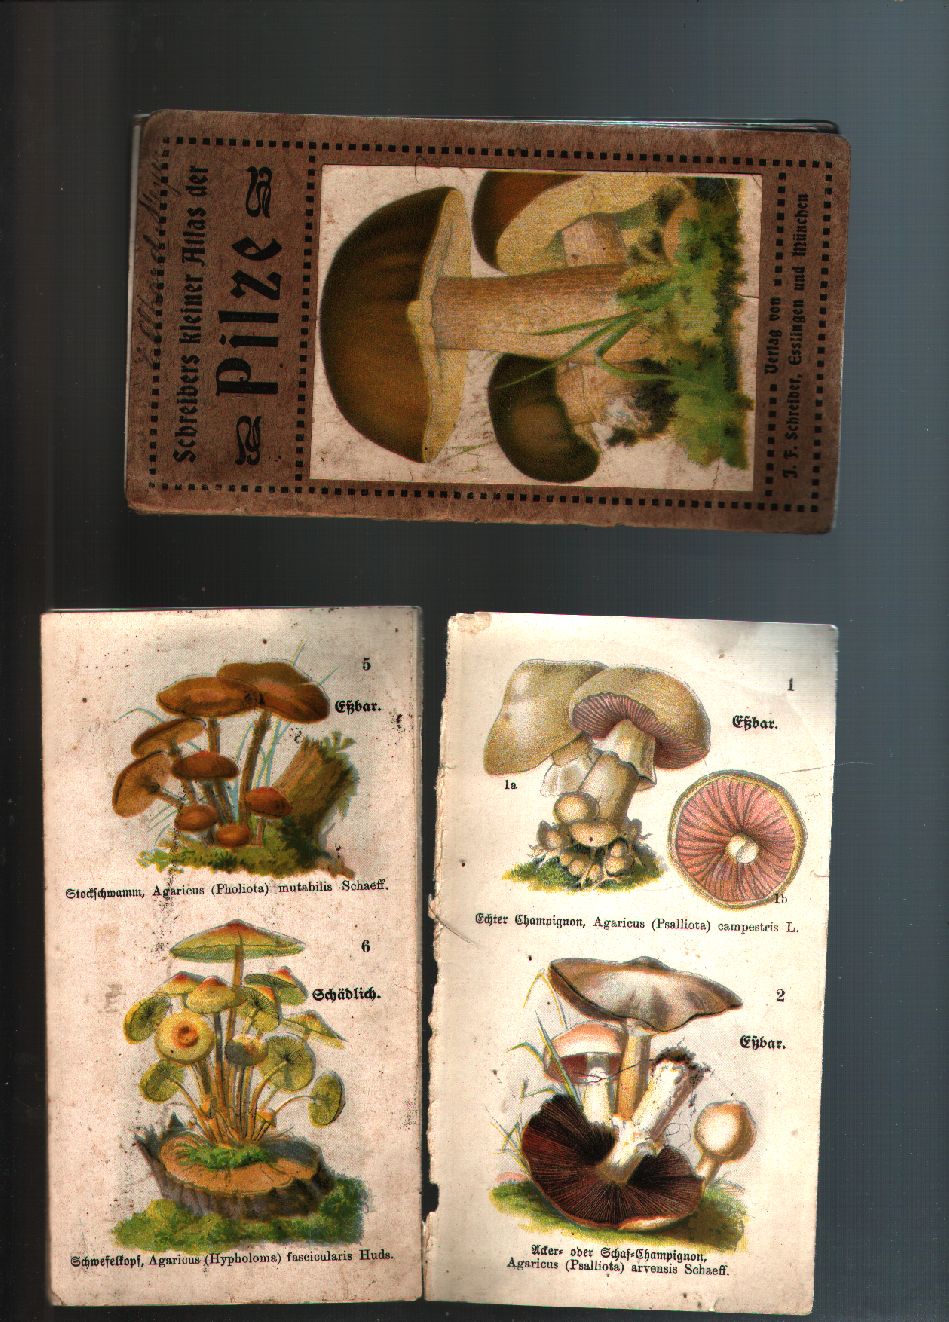 "."  Schreibers kleiner Atlas der Pilze 